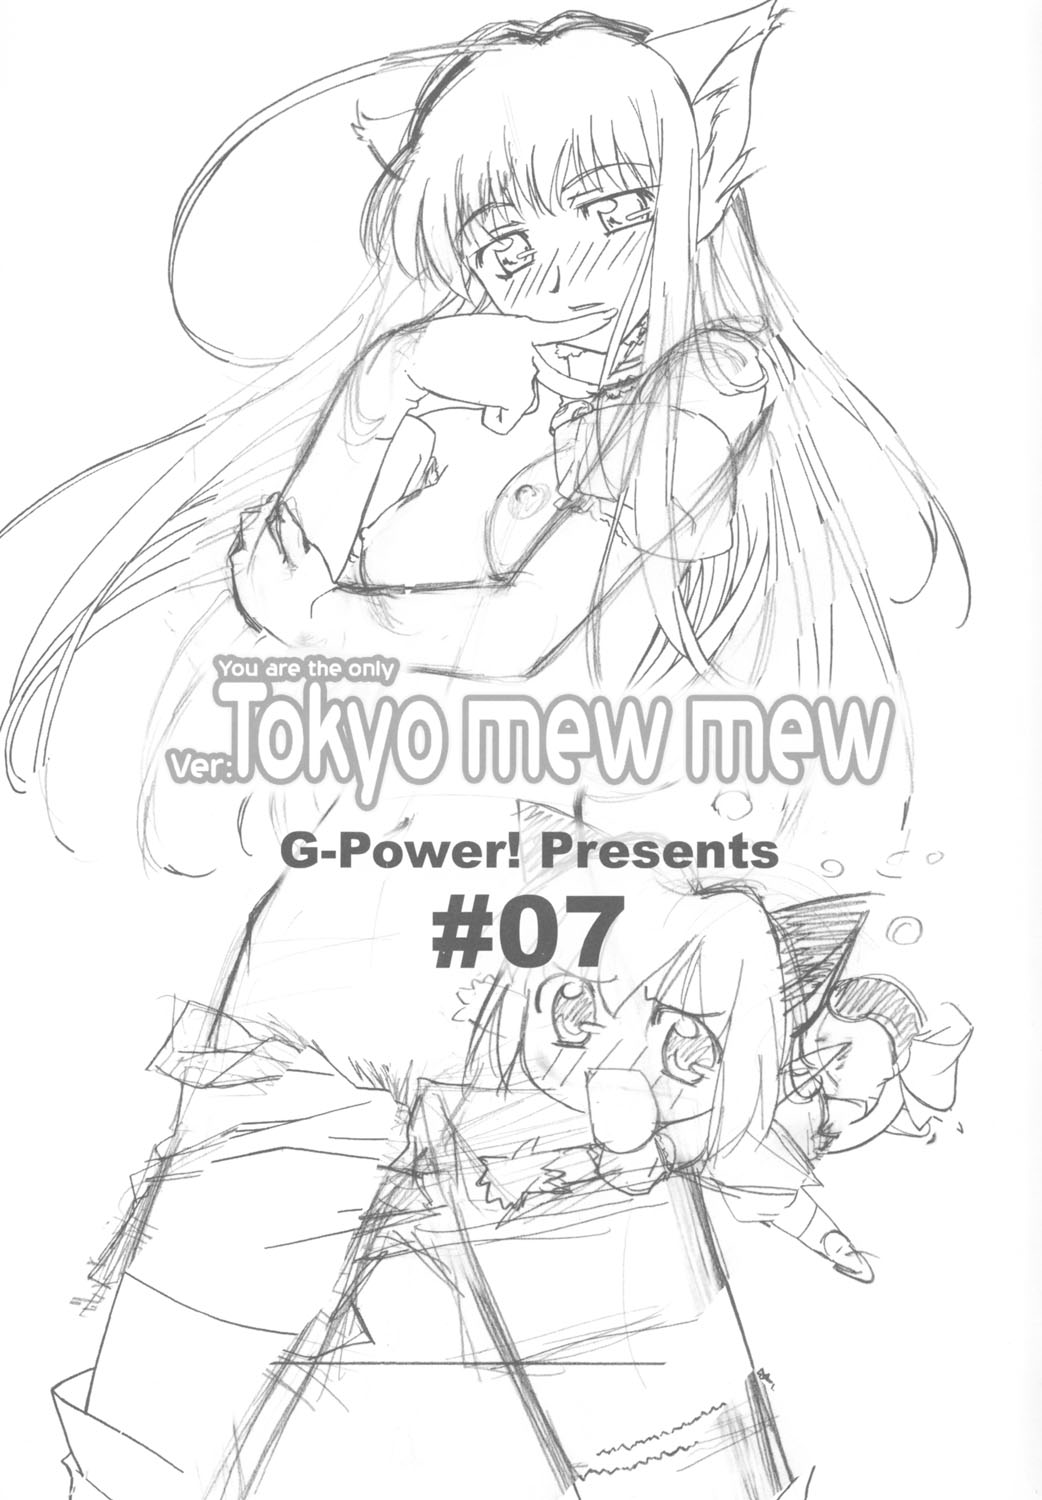 (C63) [G-Power! (Gody、SASAYUKi) YOU ARE THE ONLY version:Tokyo mew mew (東京ミュウミュウ)